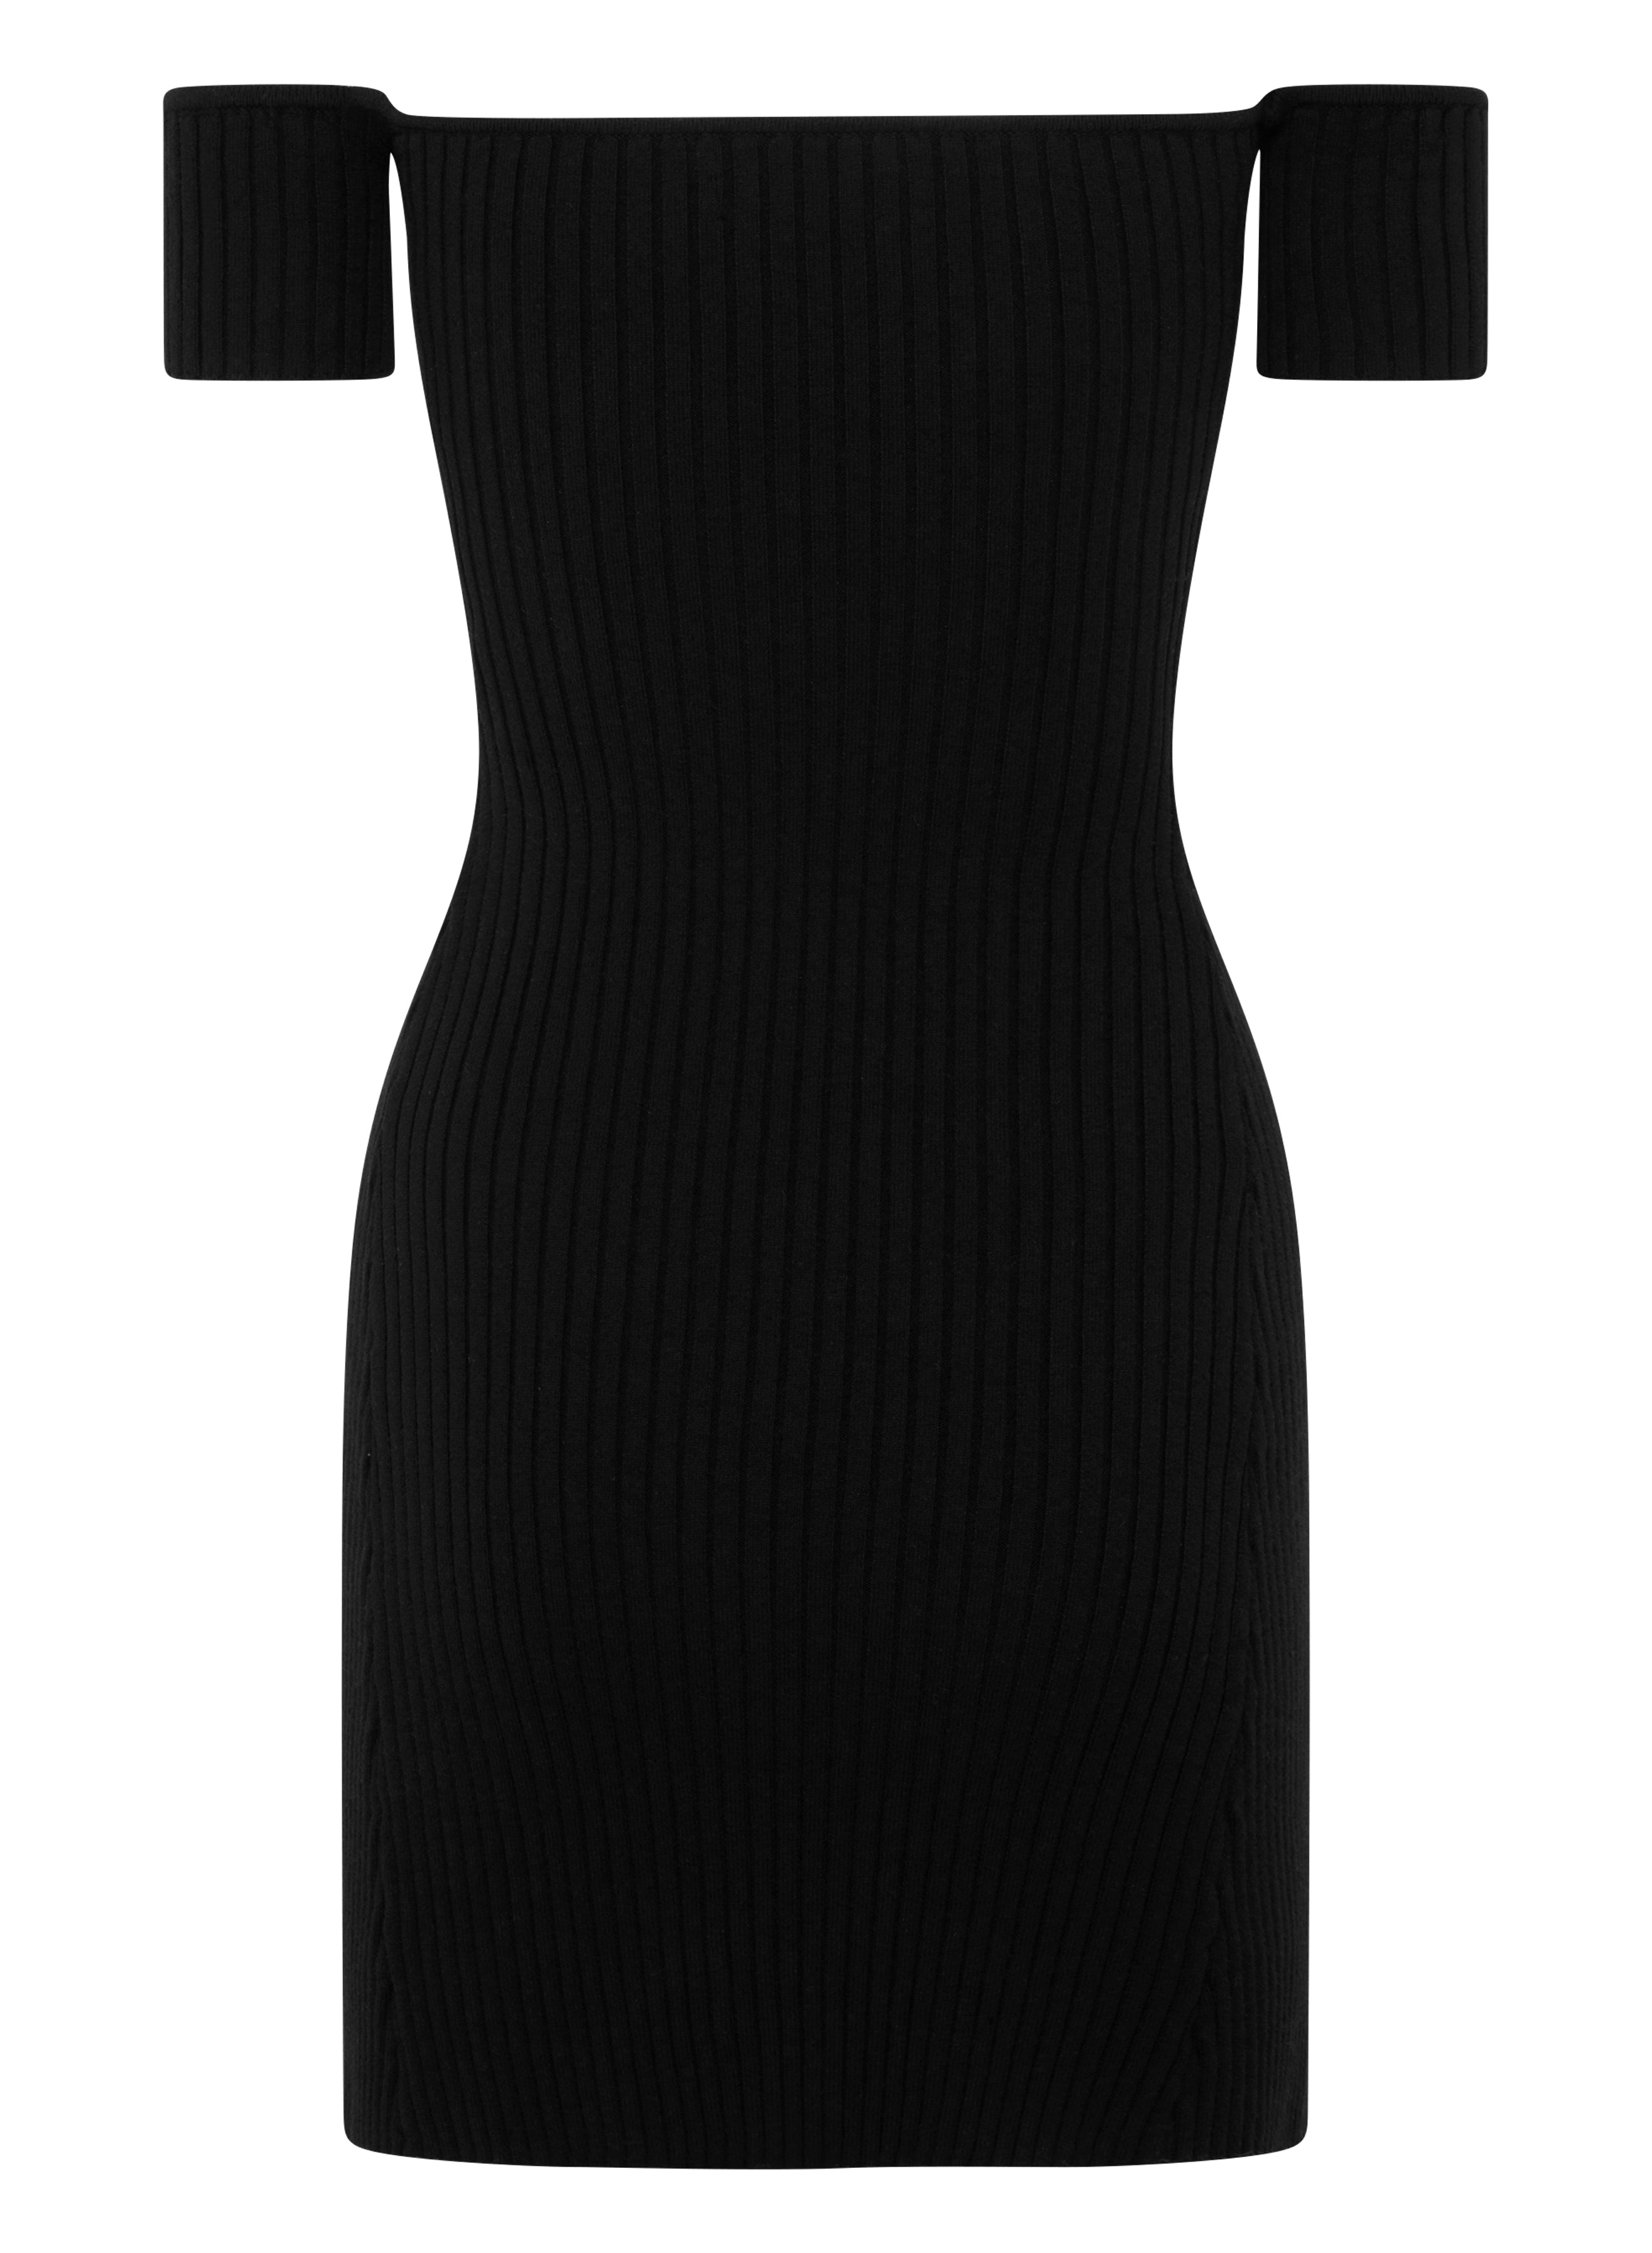 Candice - Black Strapless Short Dress